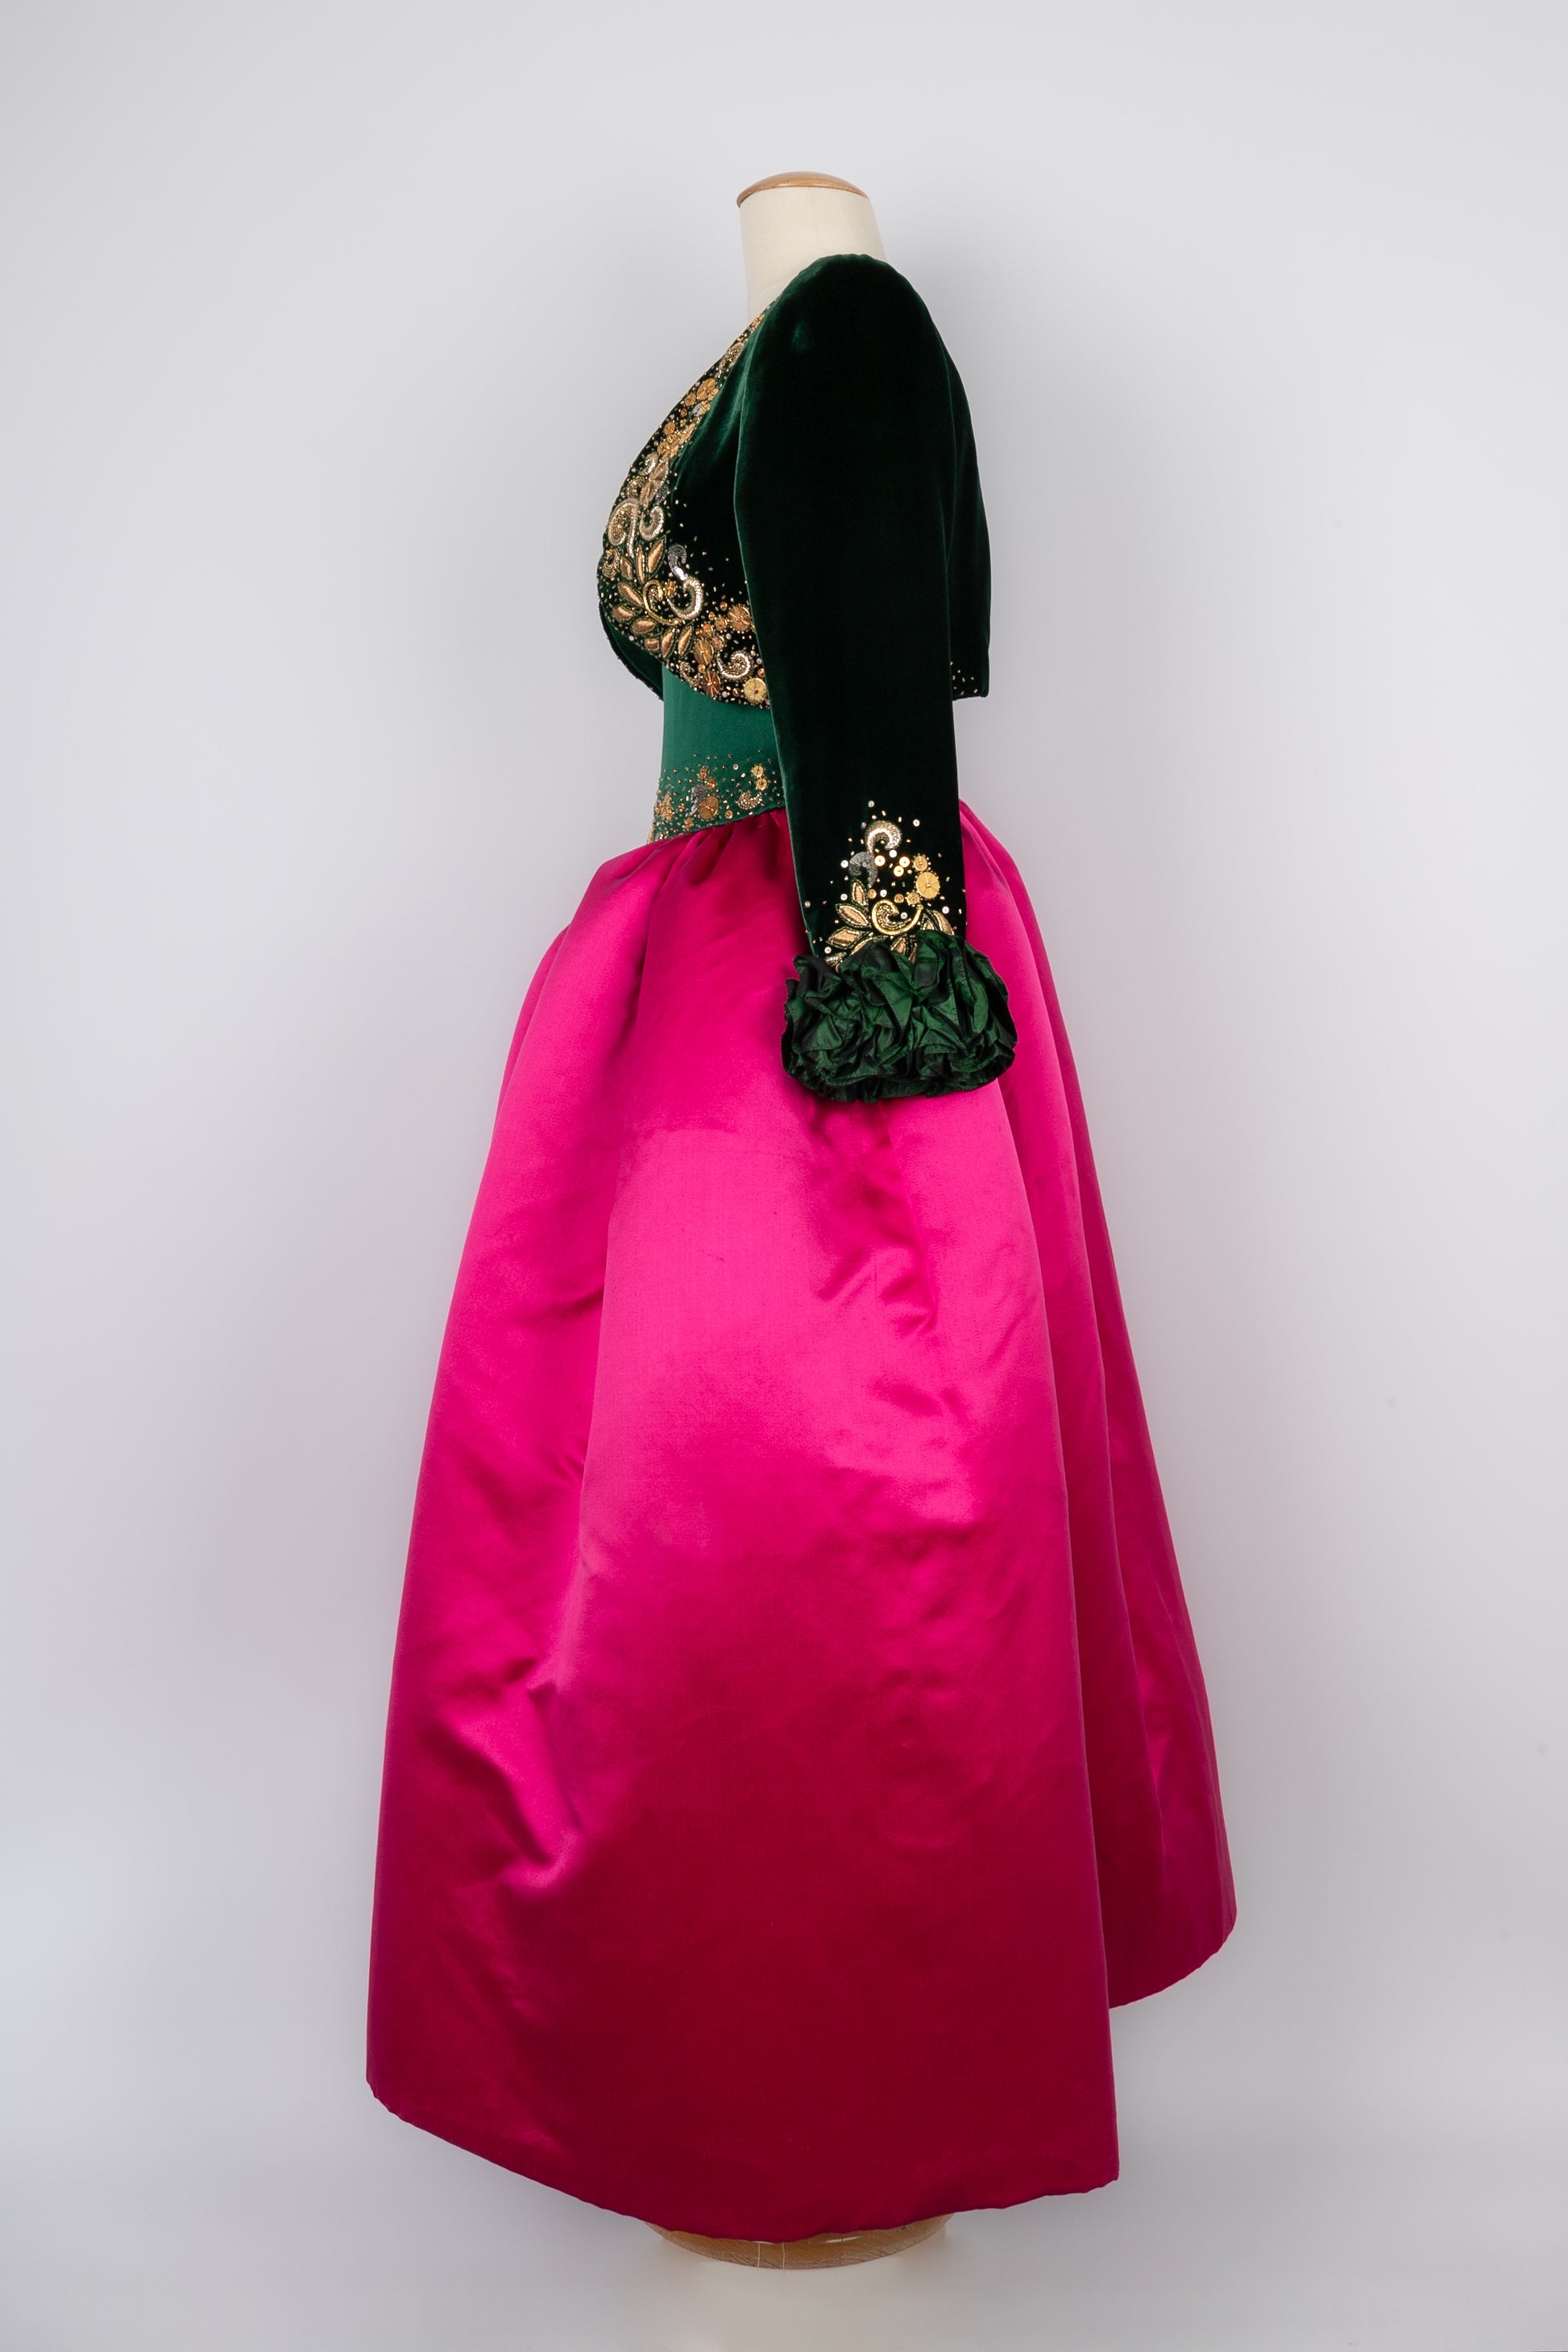 Robe Nina Ricci Haute Couture 1991/1992